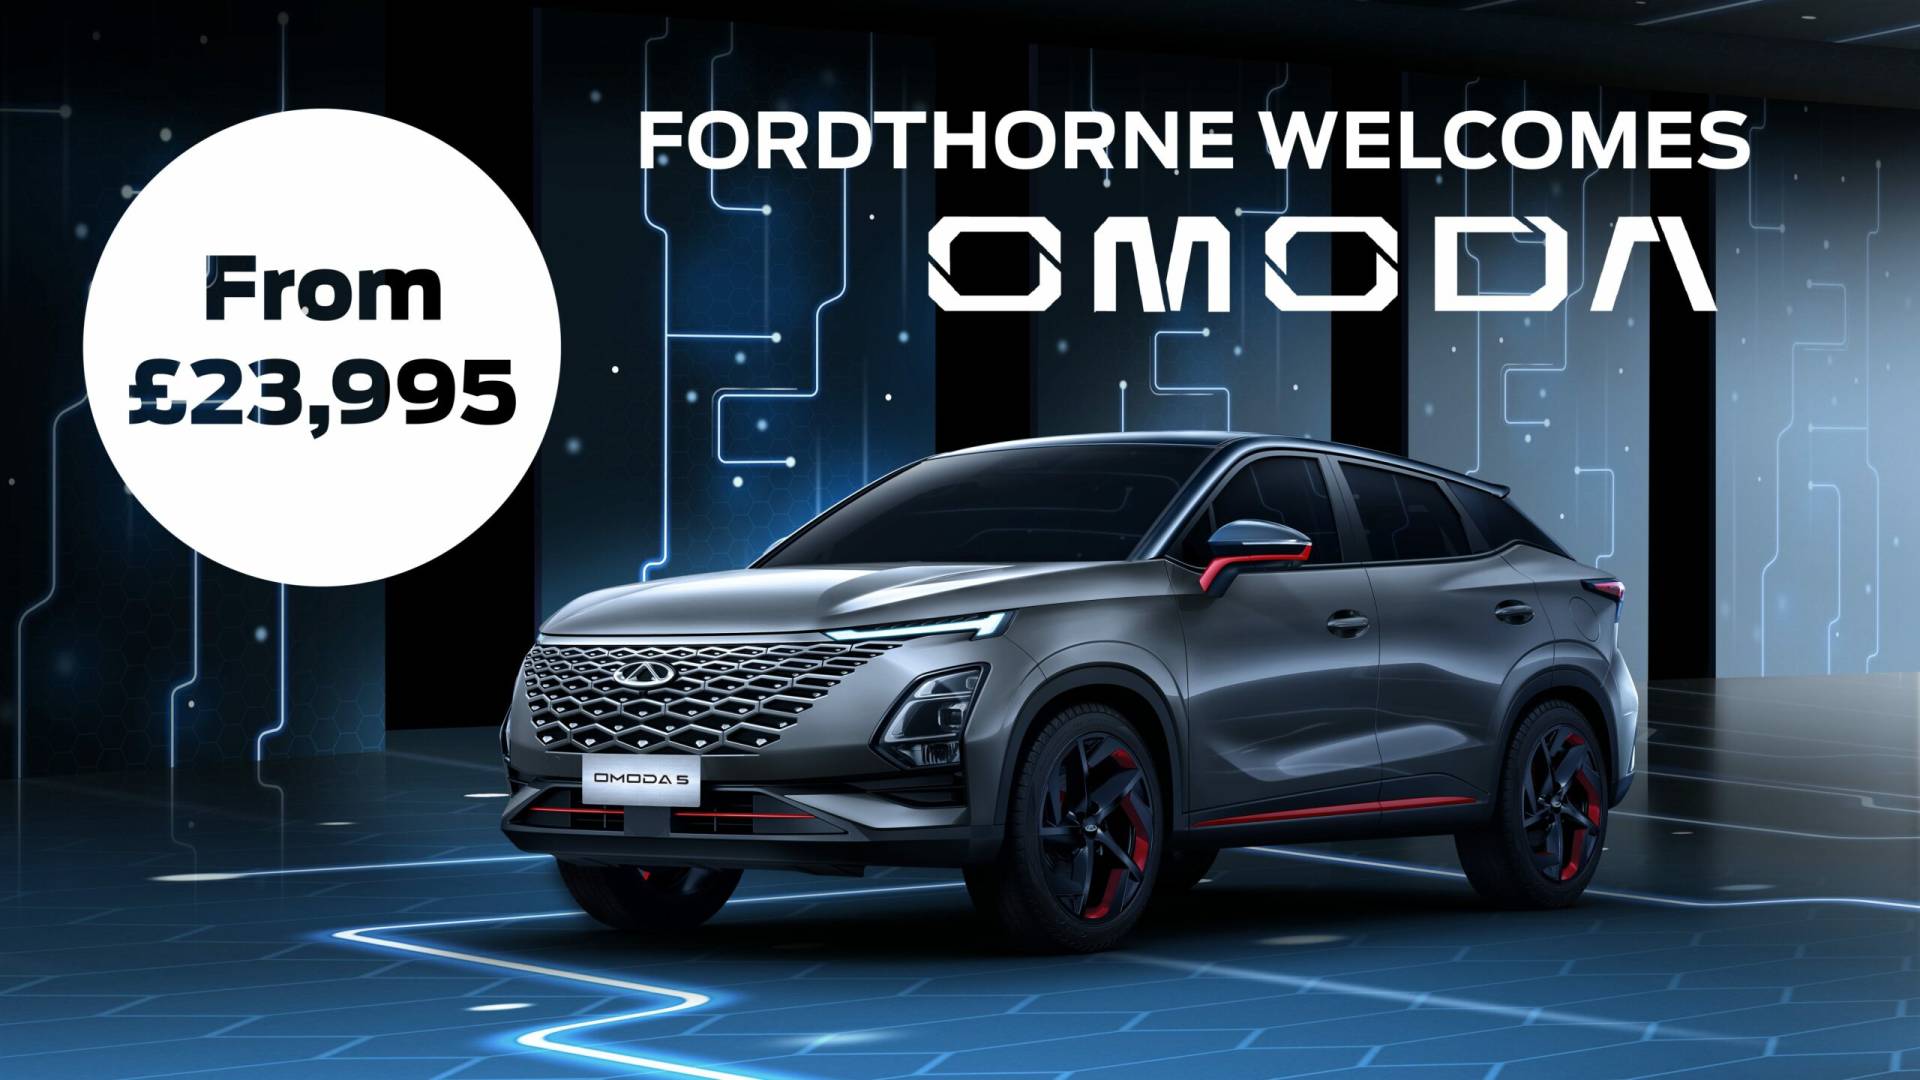 Fordthorne presents OMODA featuring the shiny silver OMODA5